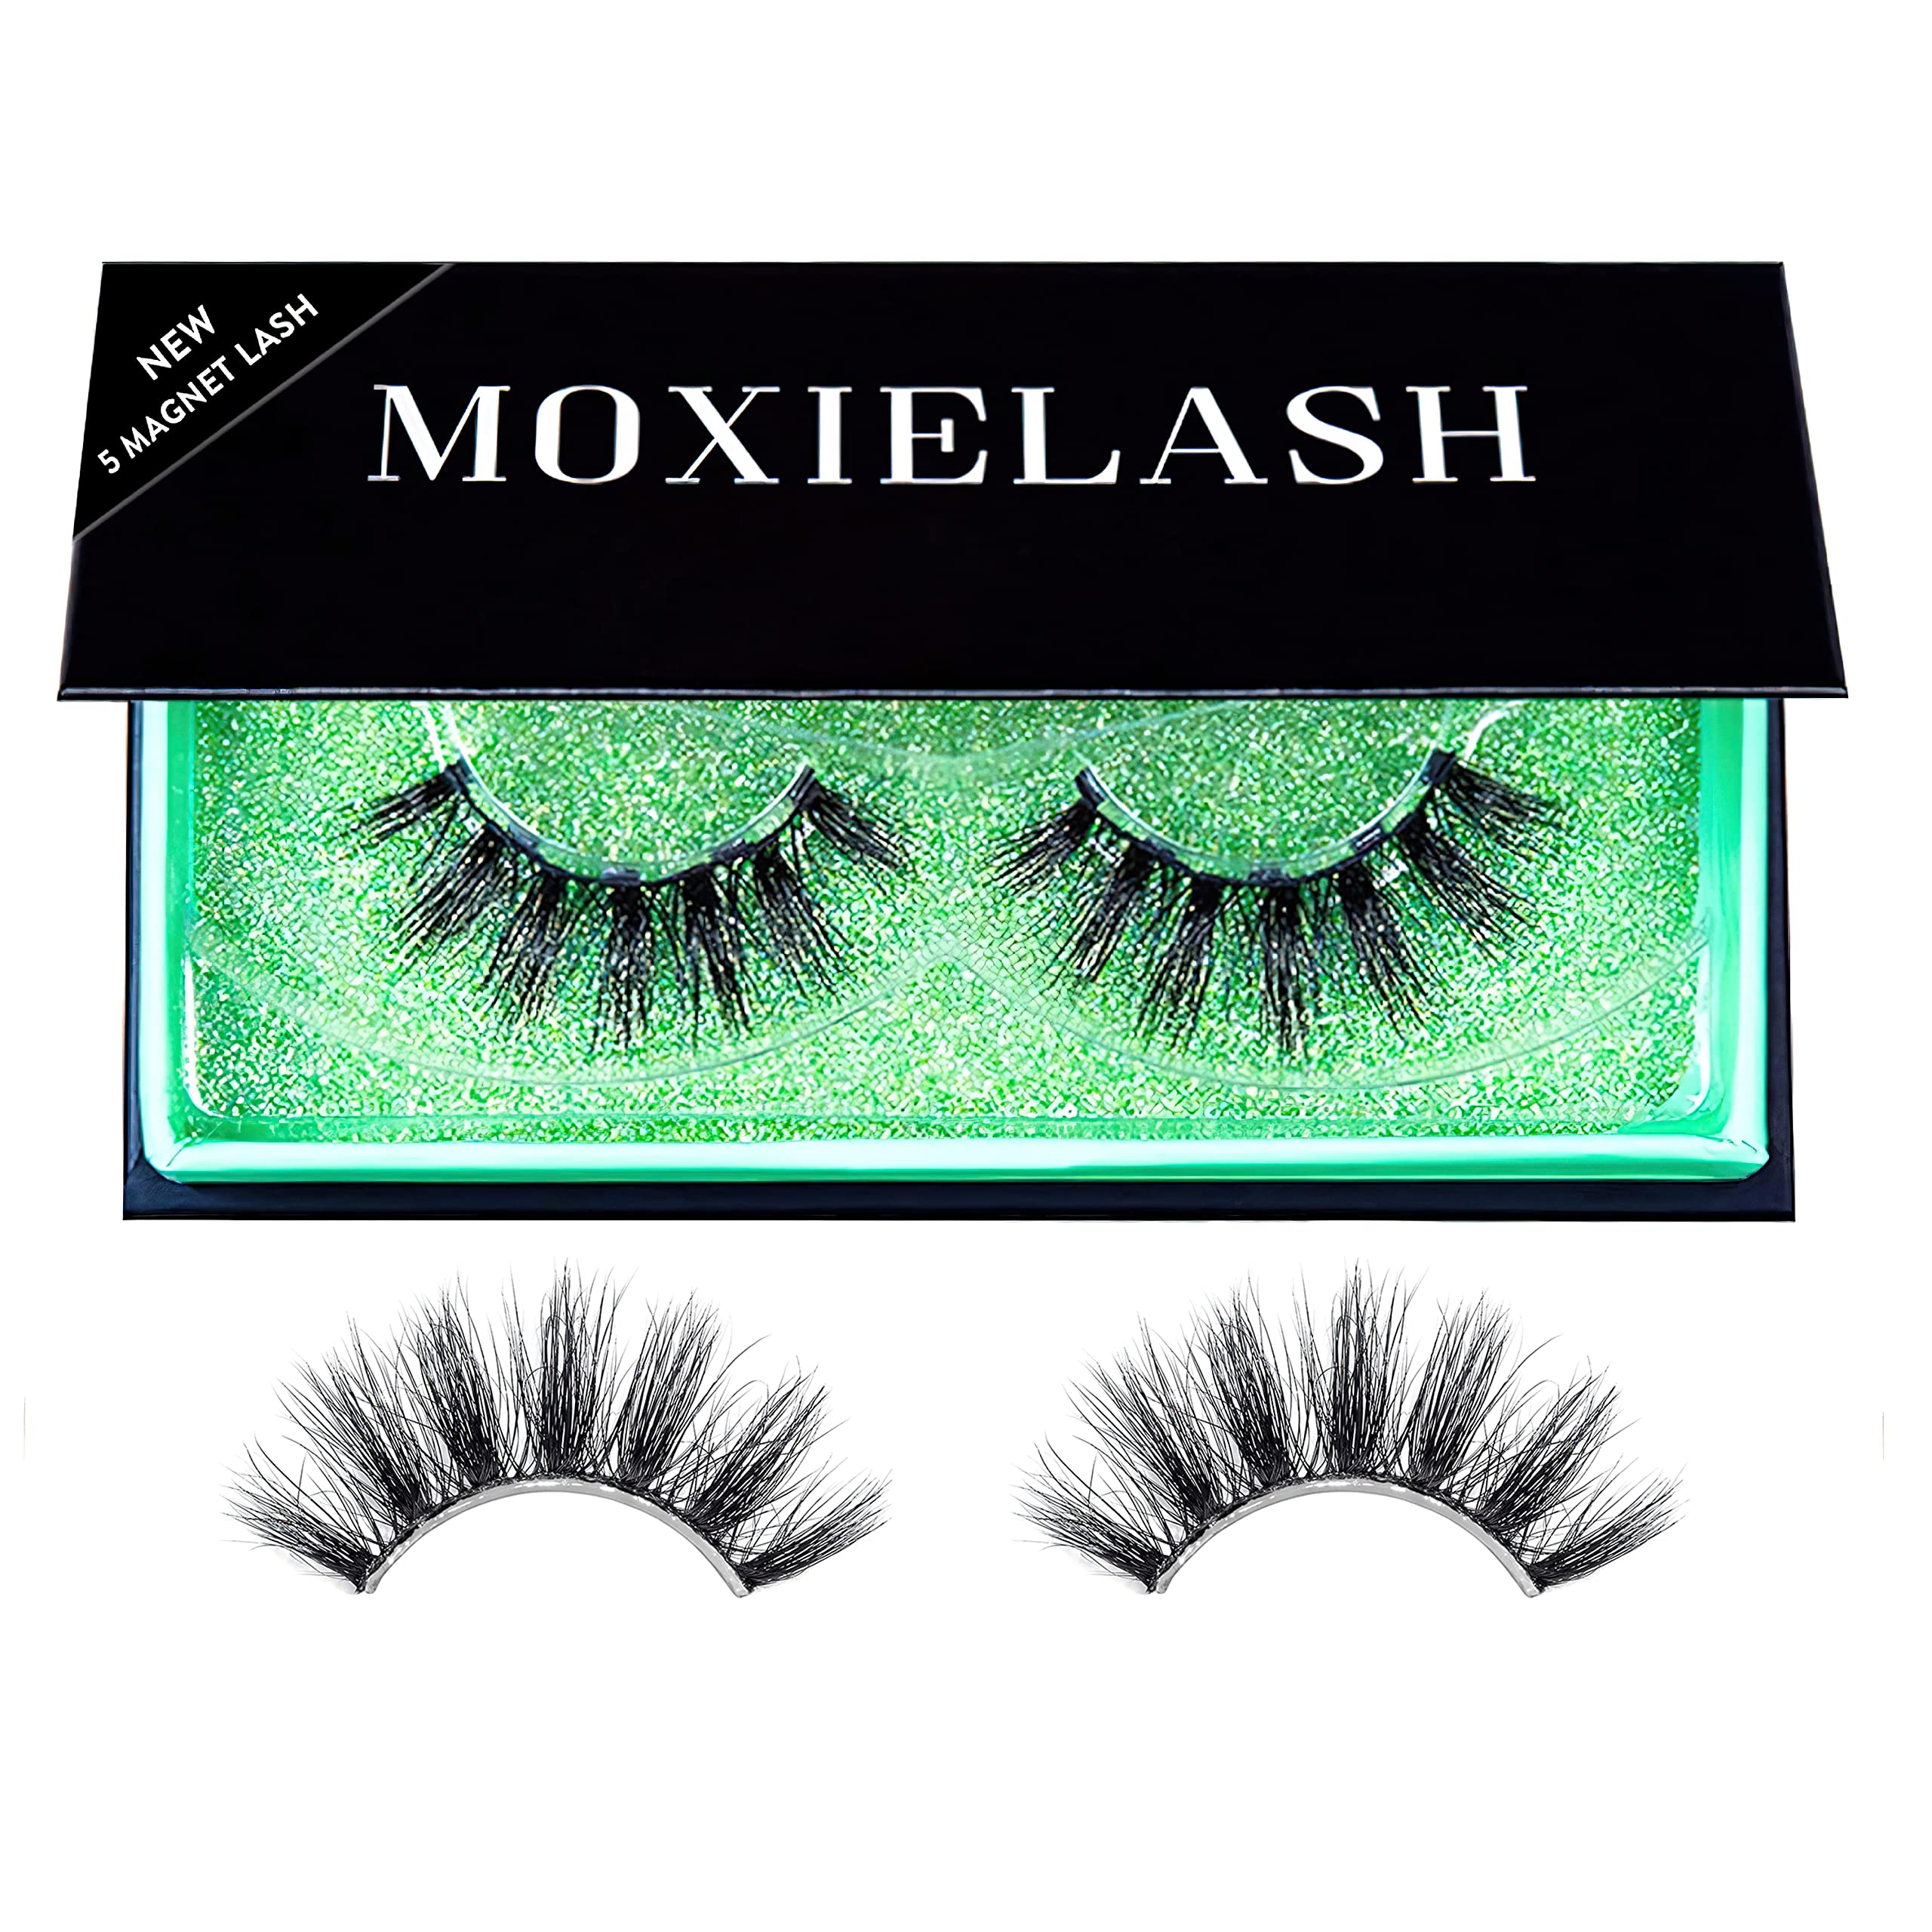 MoxieLash Magnetic Eyelashes - Classy and Money Reusable Magnetic Lashes, No Glue or Alcohol, Full Glam Volume